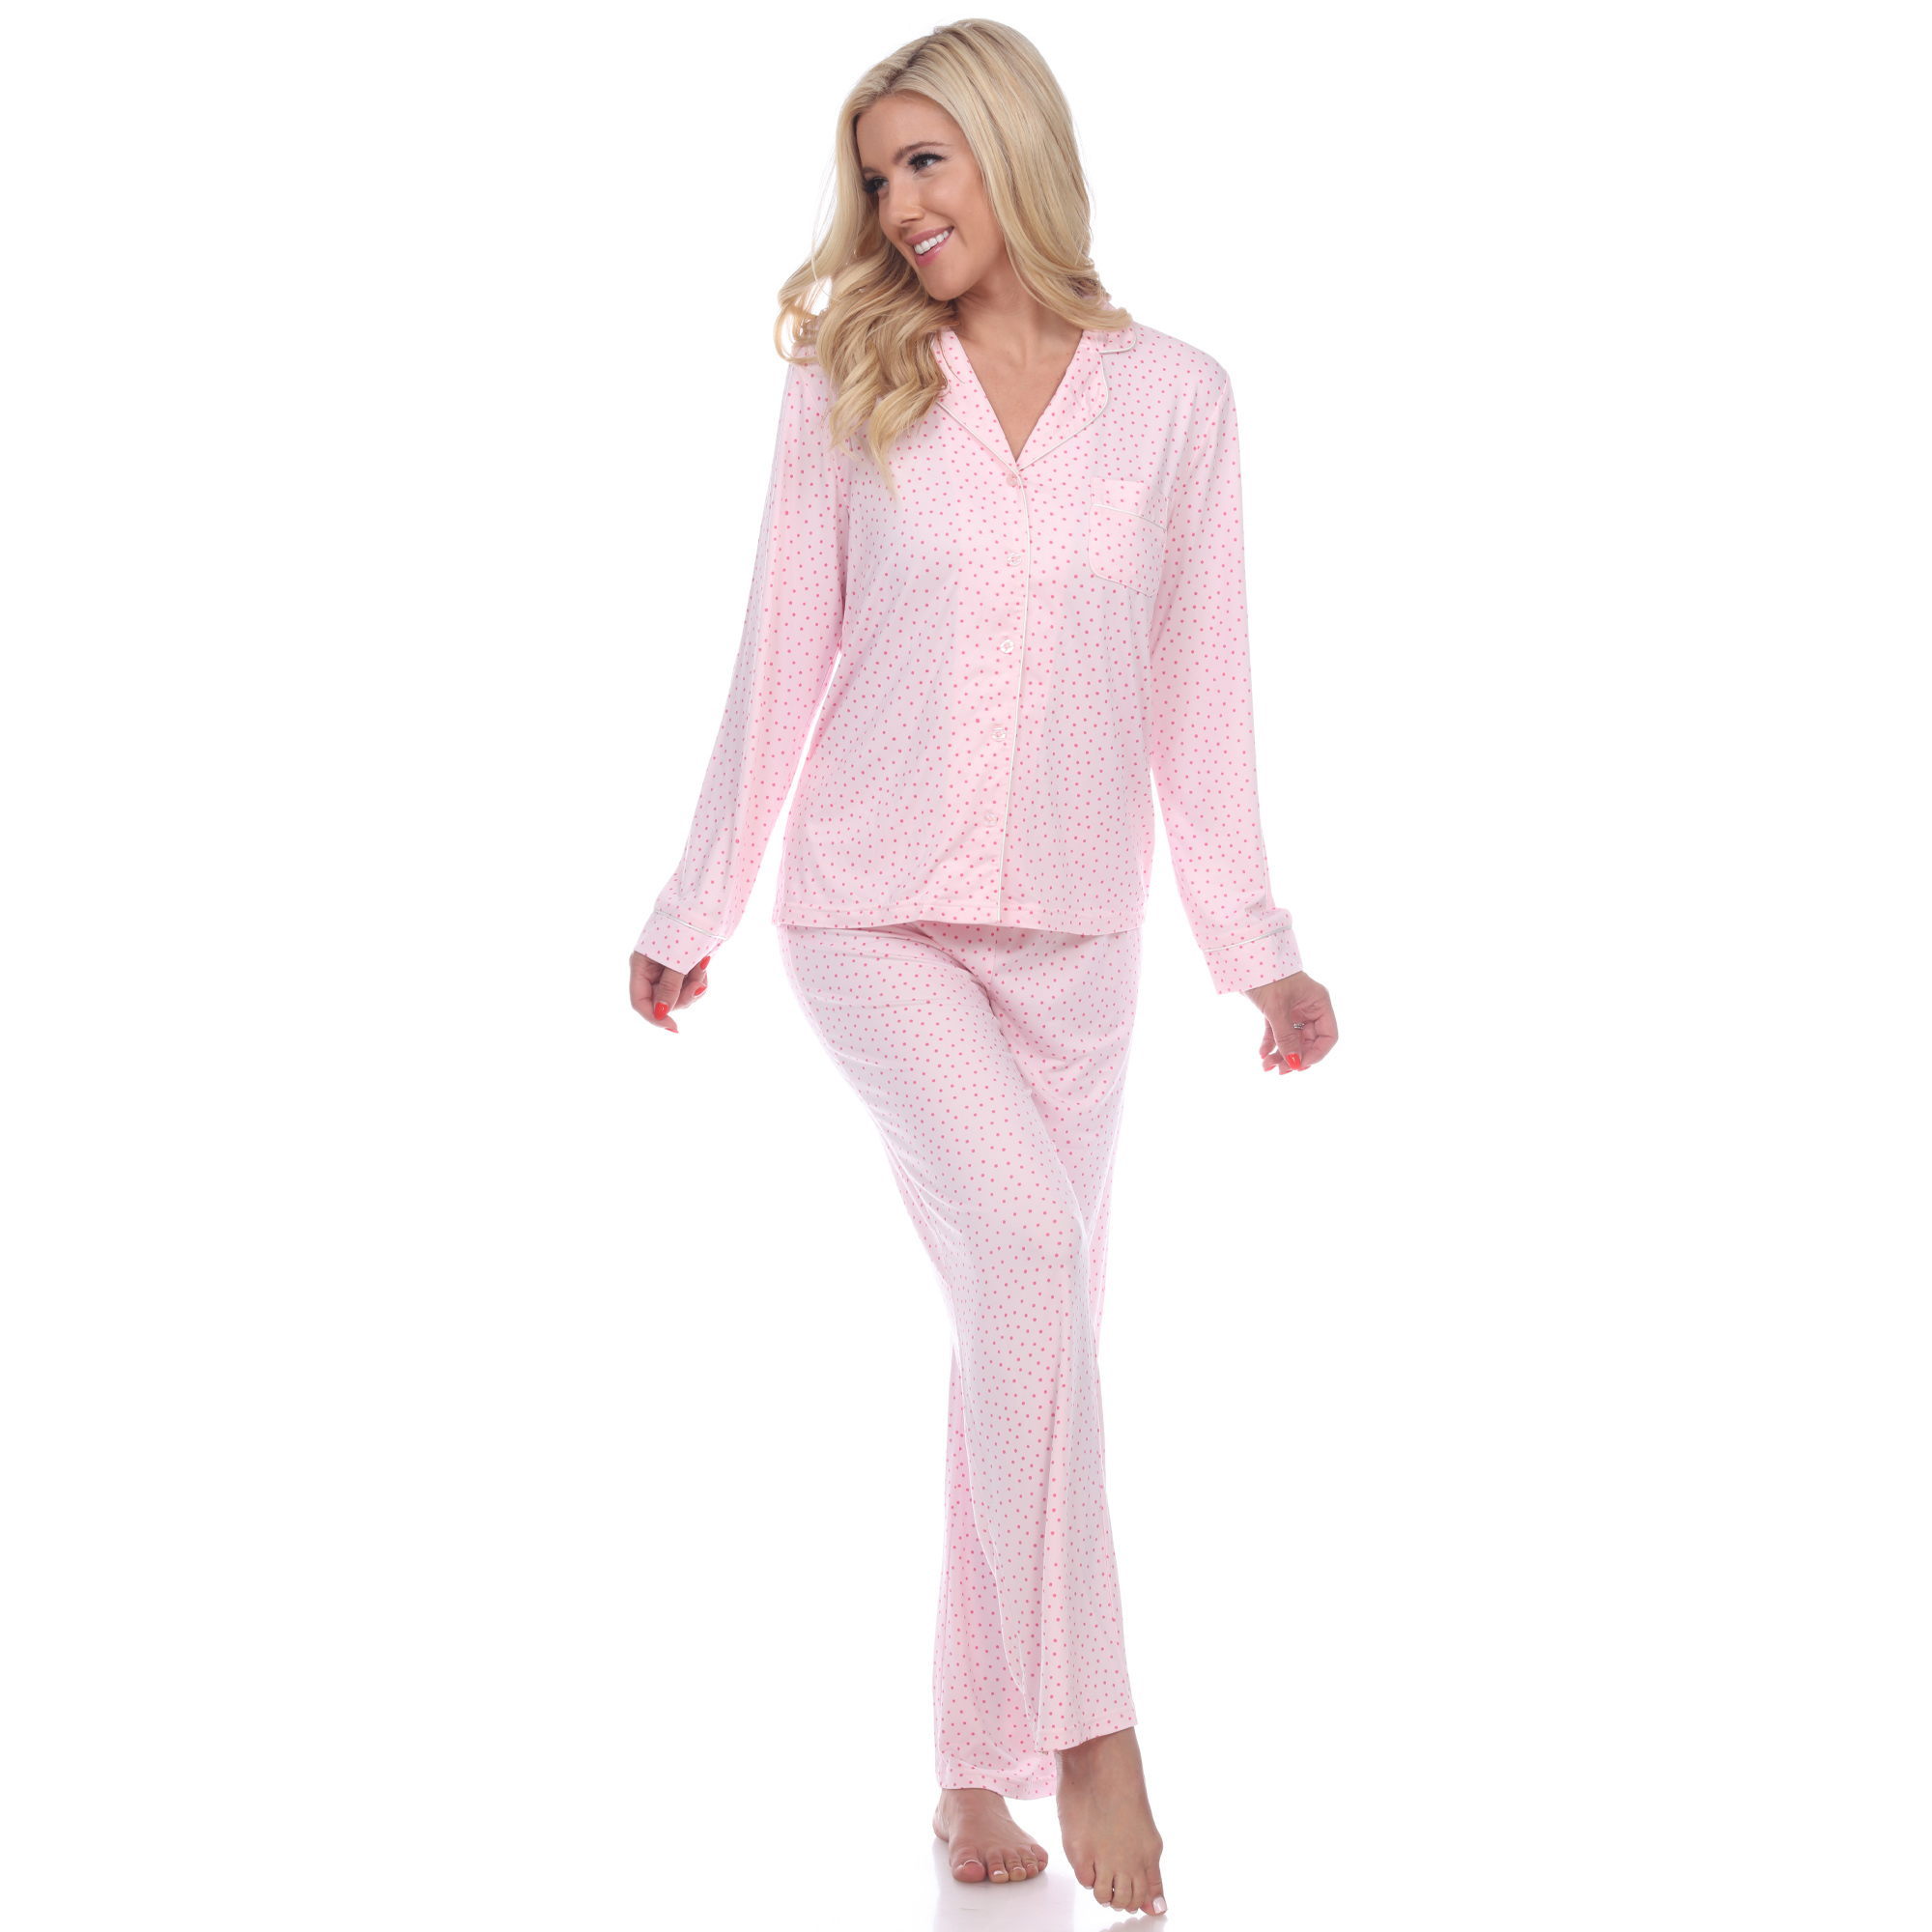 White Mark Women's Long Sleeve Dots Pajama Set - Pink, X-Large